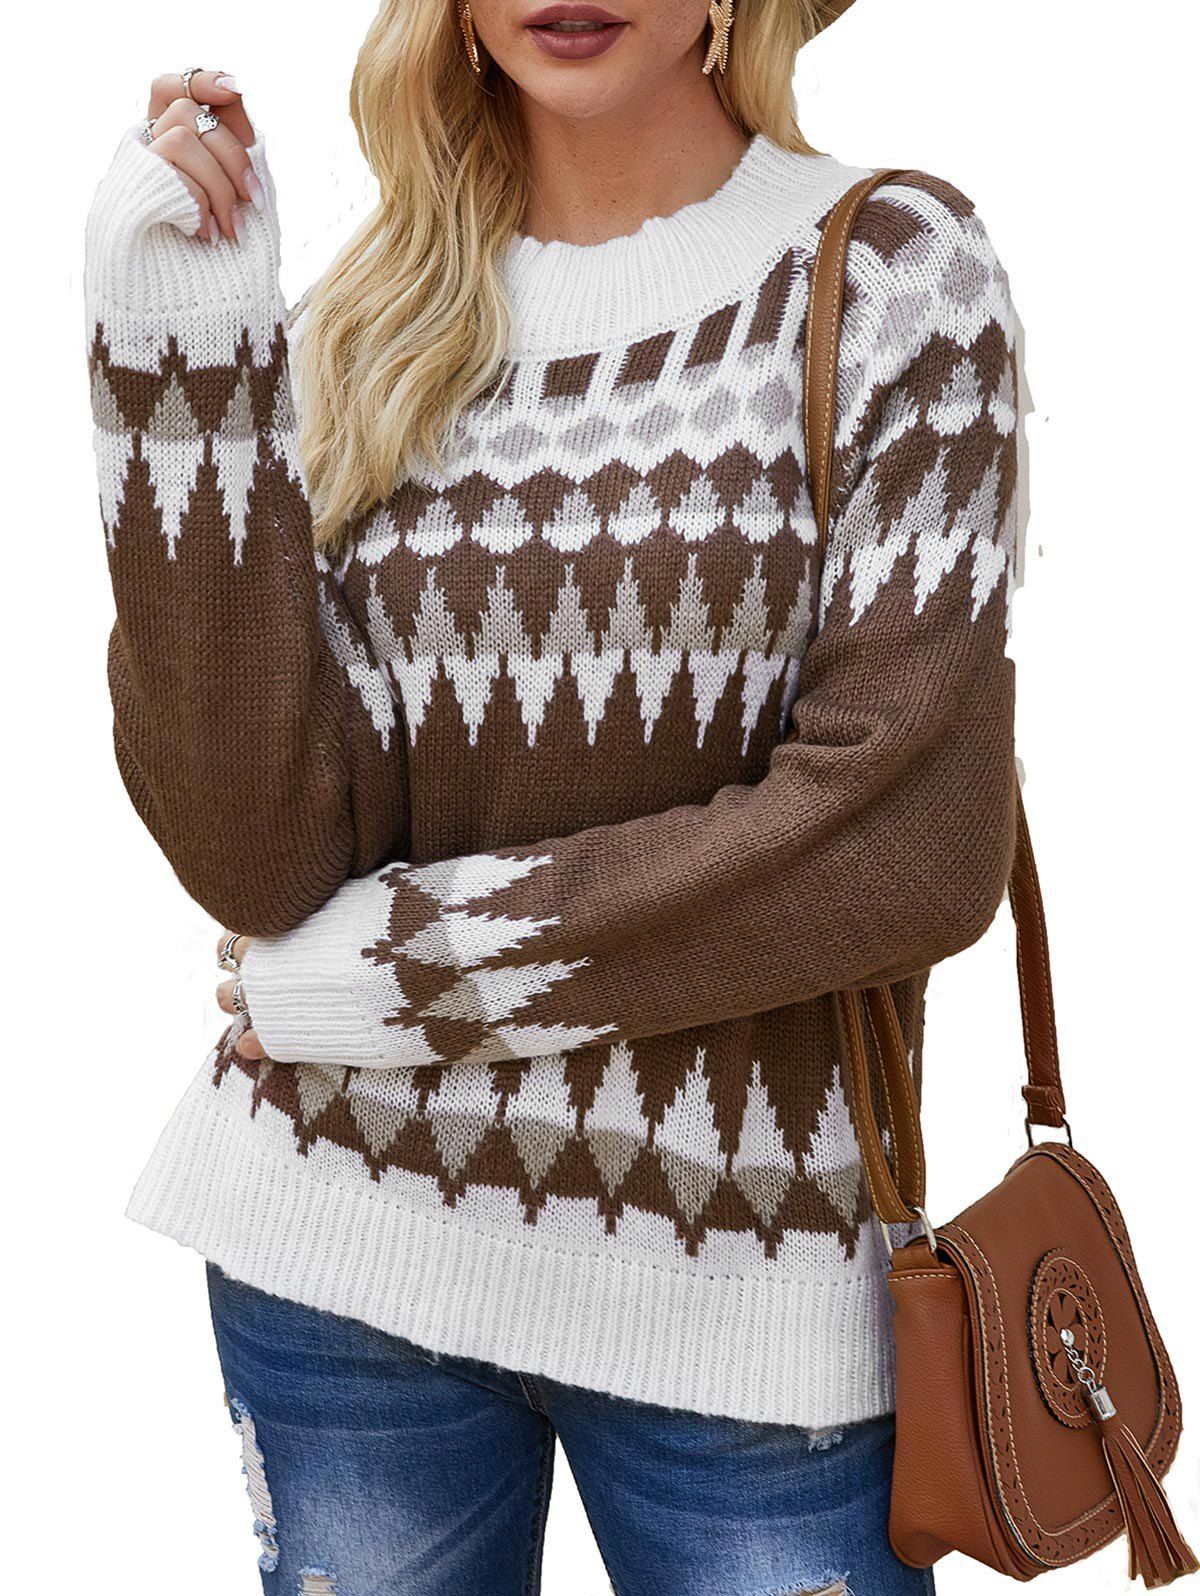 Graphic Raglan Sleeve Mock Neck Sweater - DEEP COFFEE S